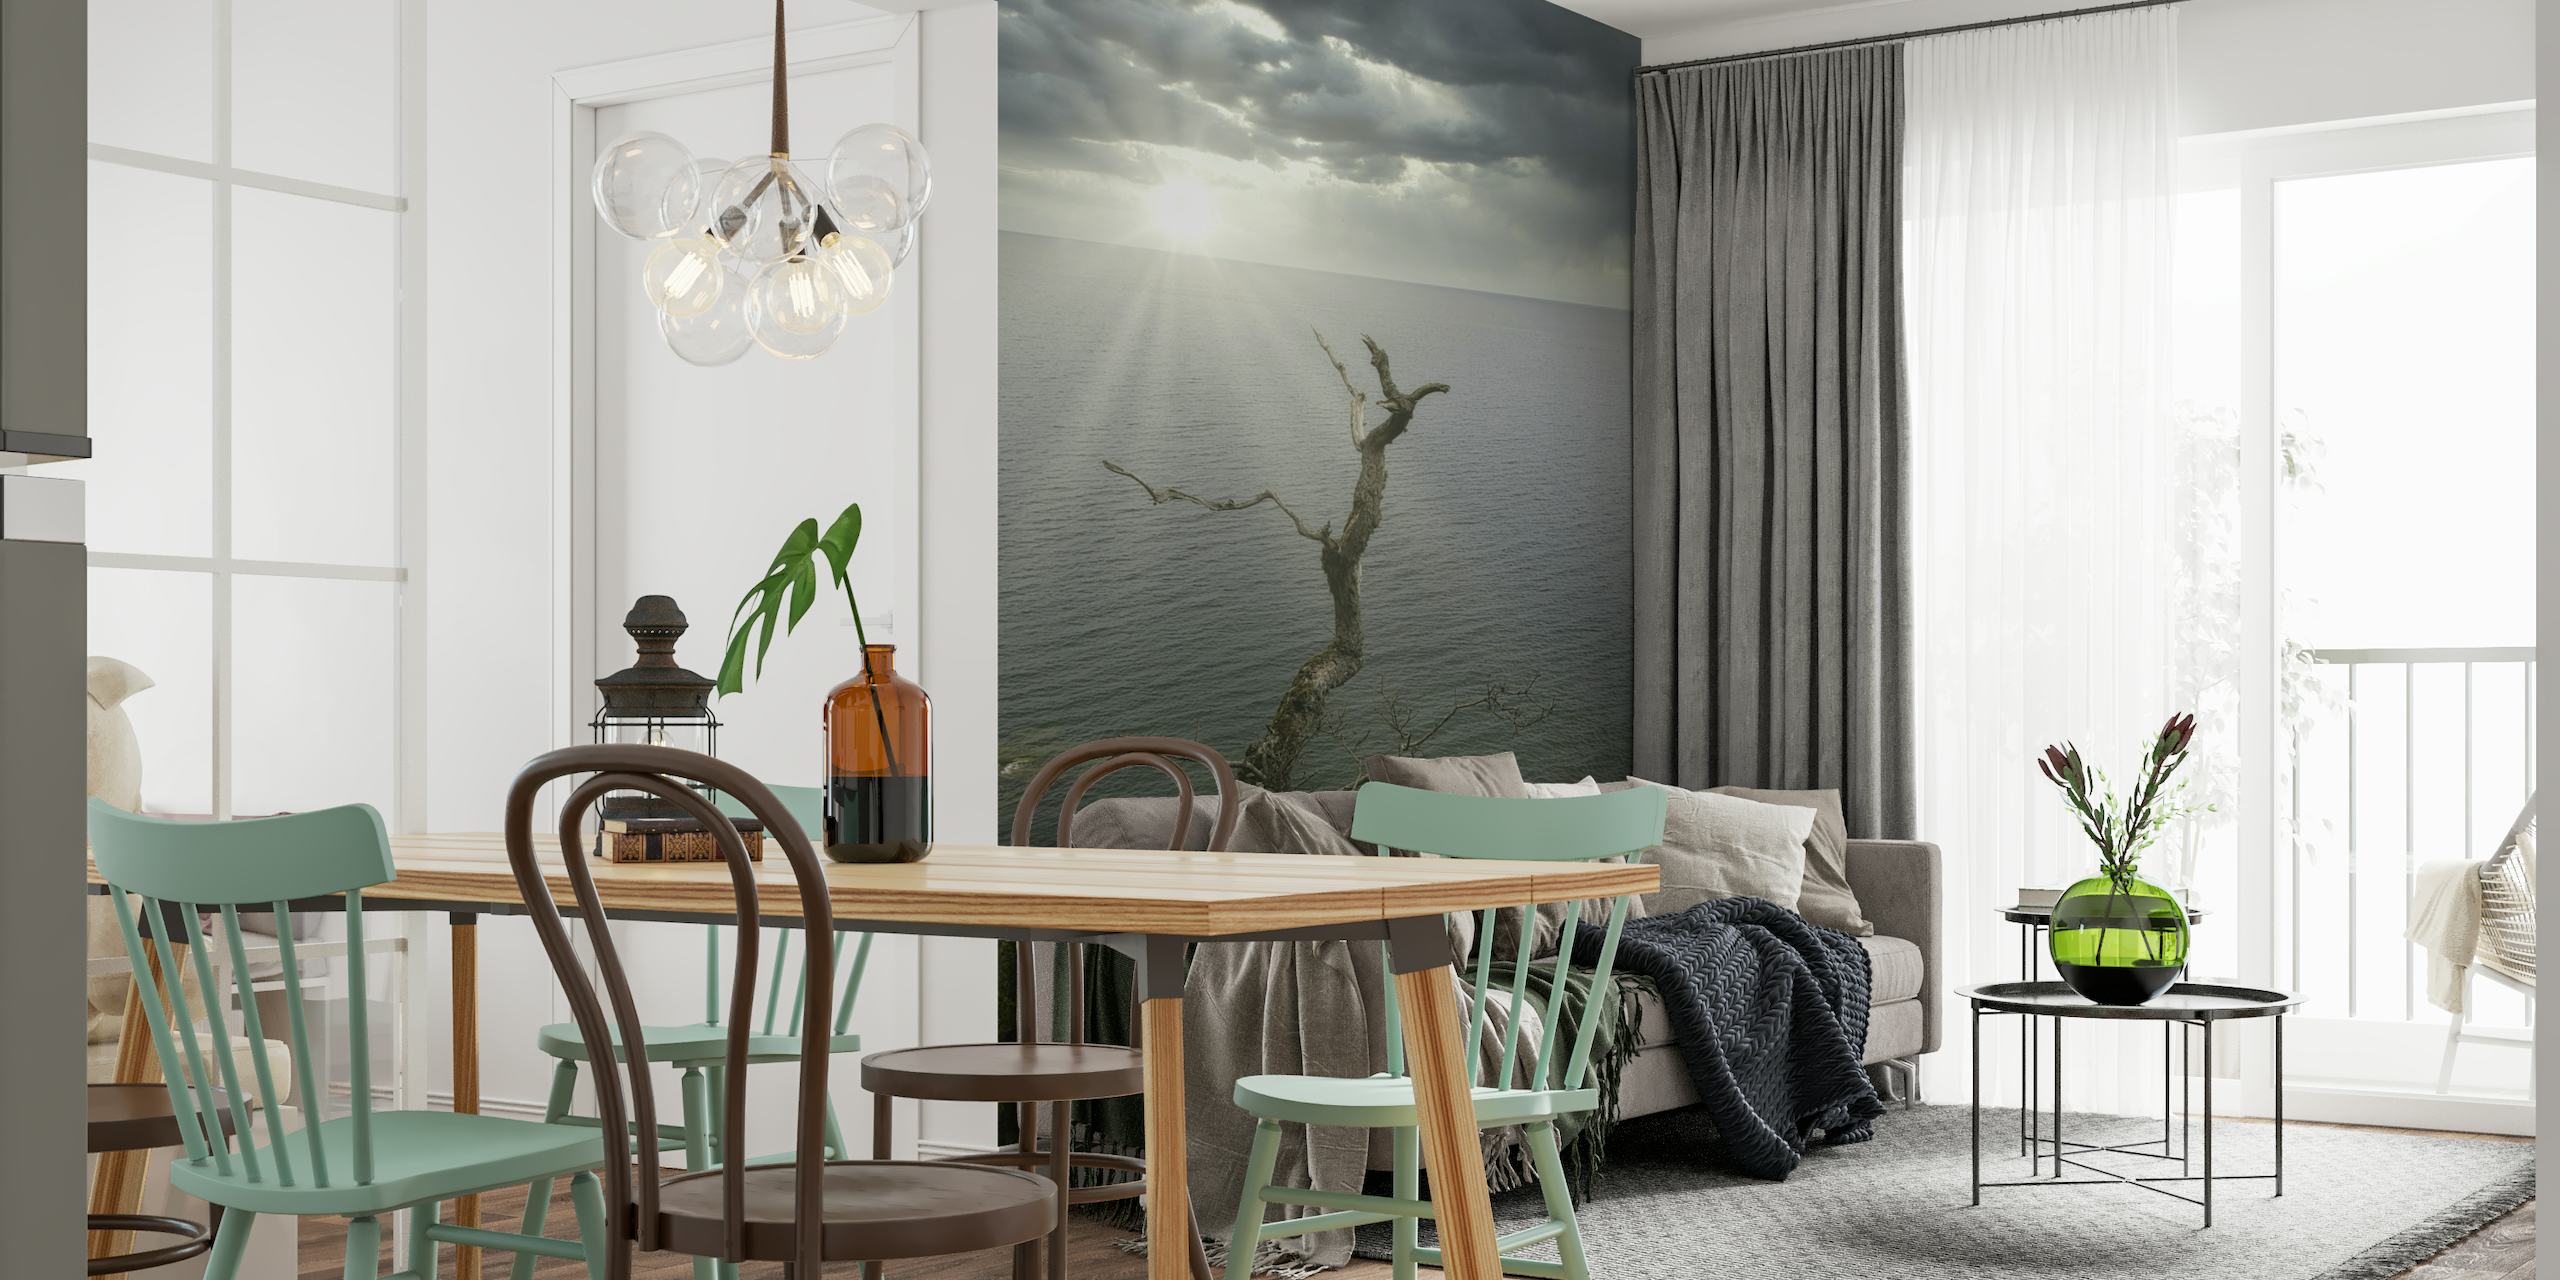 Bornholm Baltic Sea Impression papel pintado